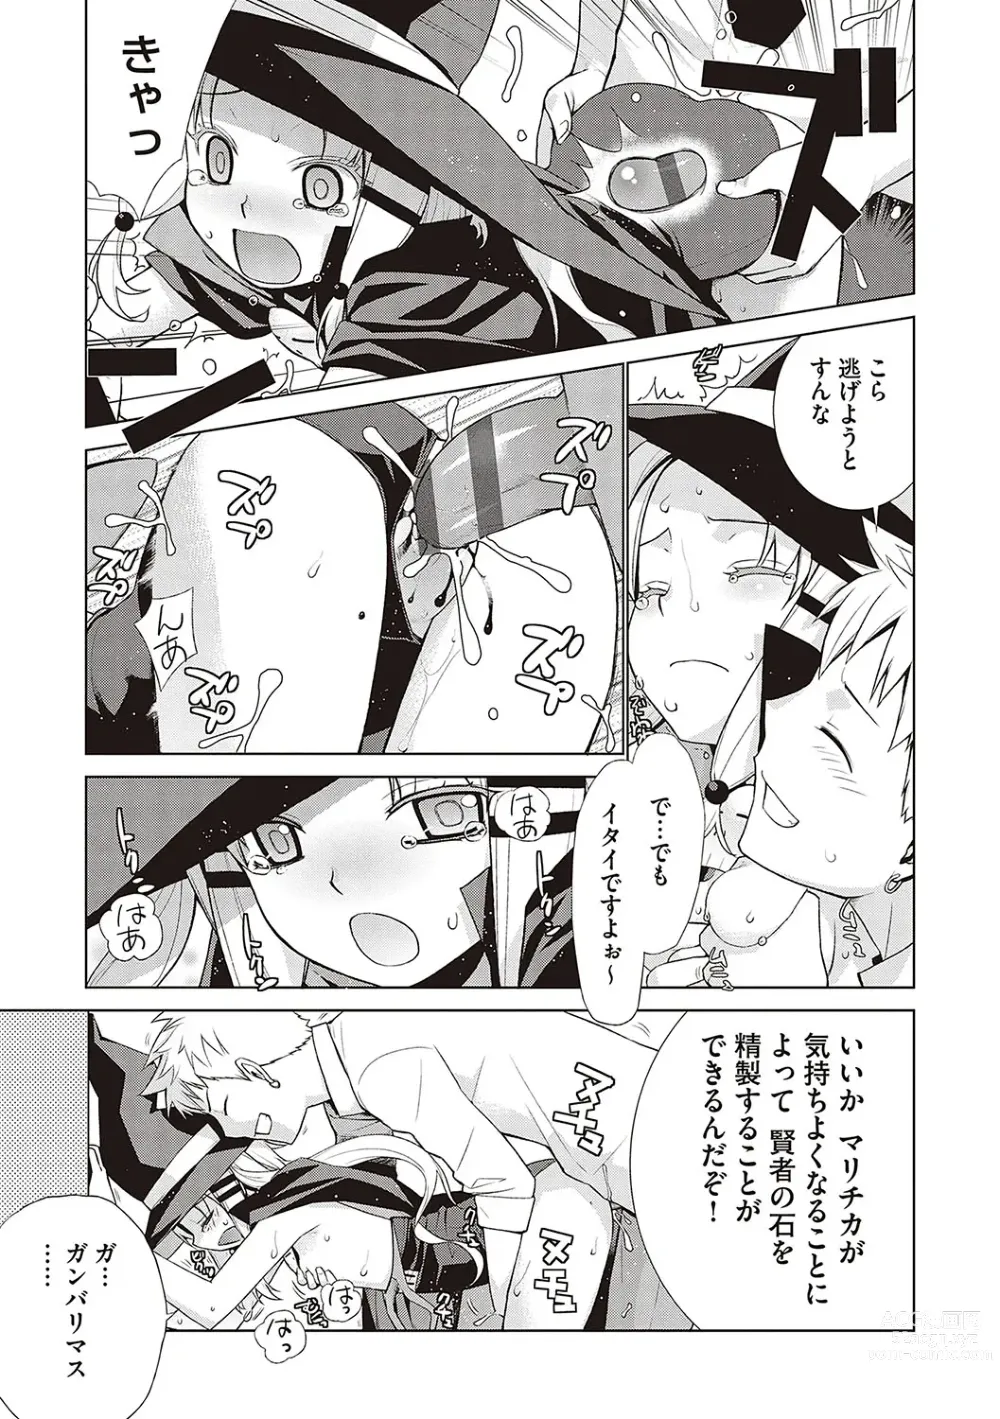 Page 256 of manga KOAKUMA DAISY